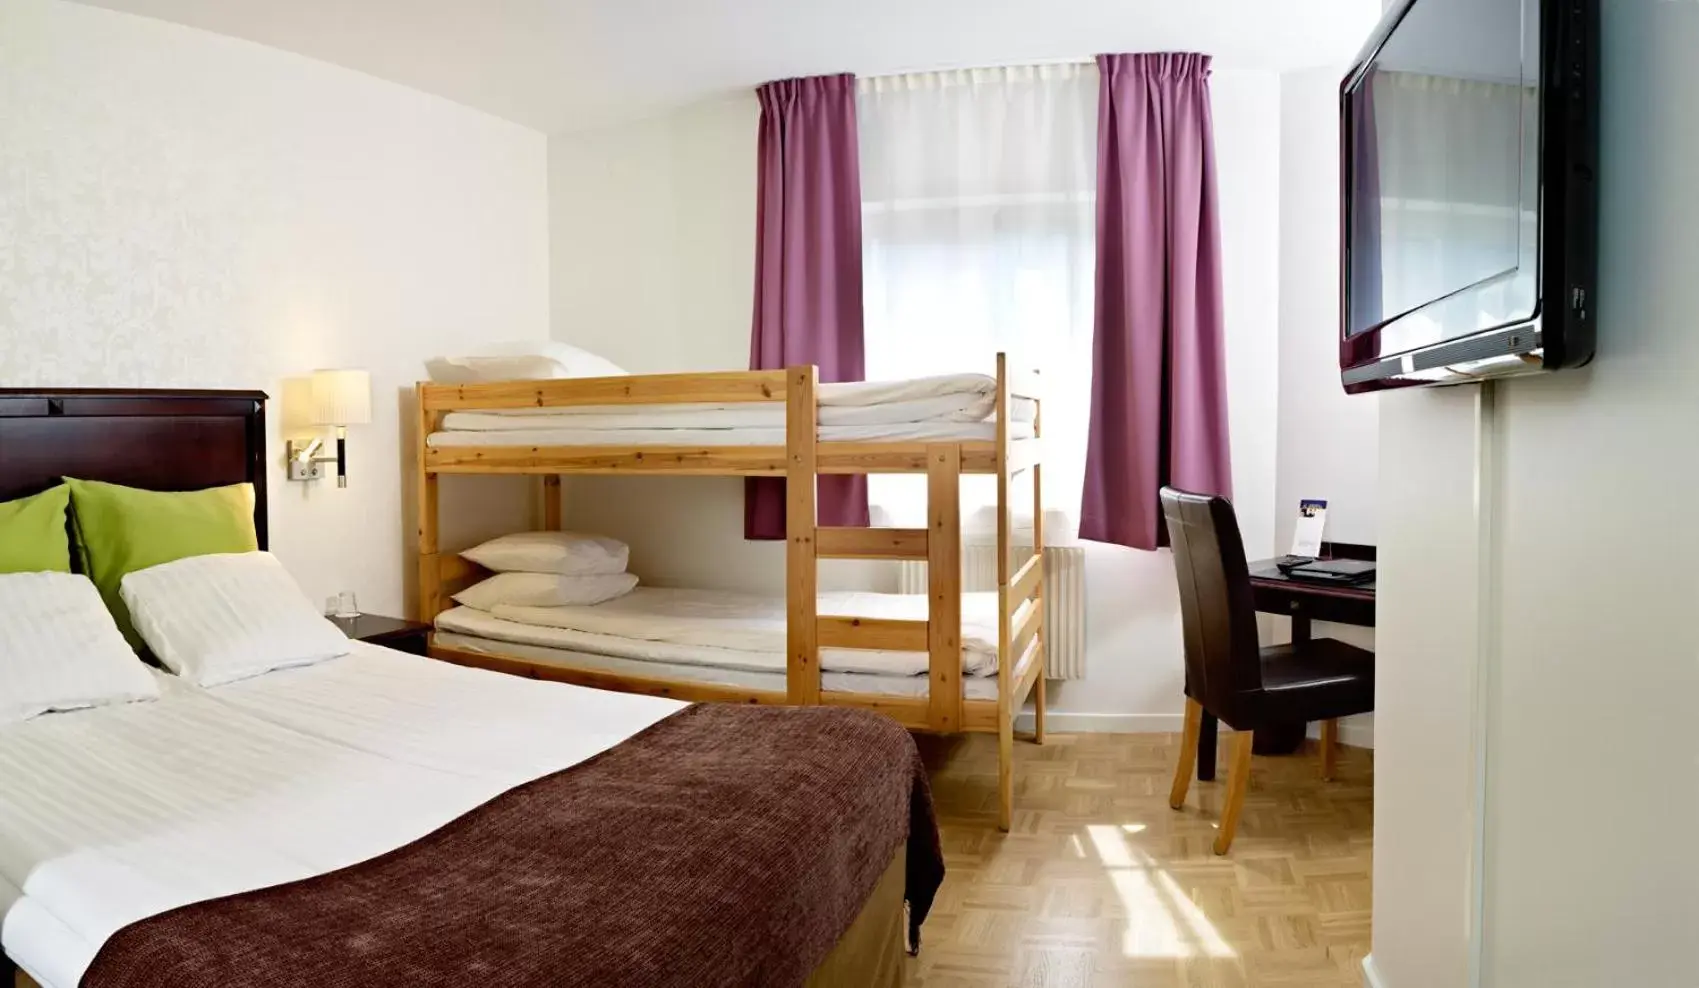 Bedroom, Bunk Bed in Best Western Vimmerby Stadshotell